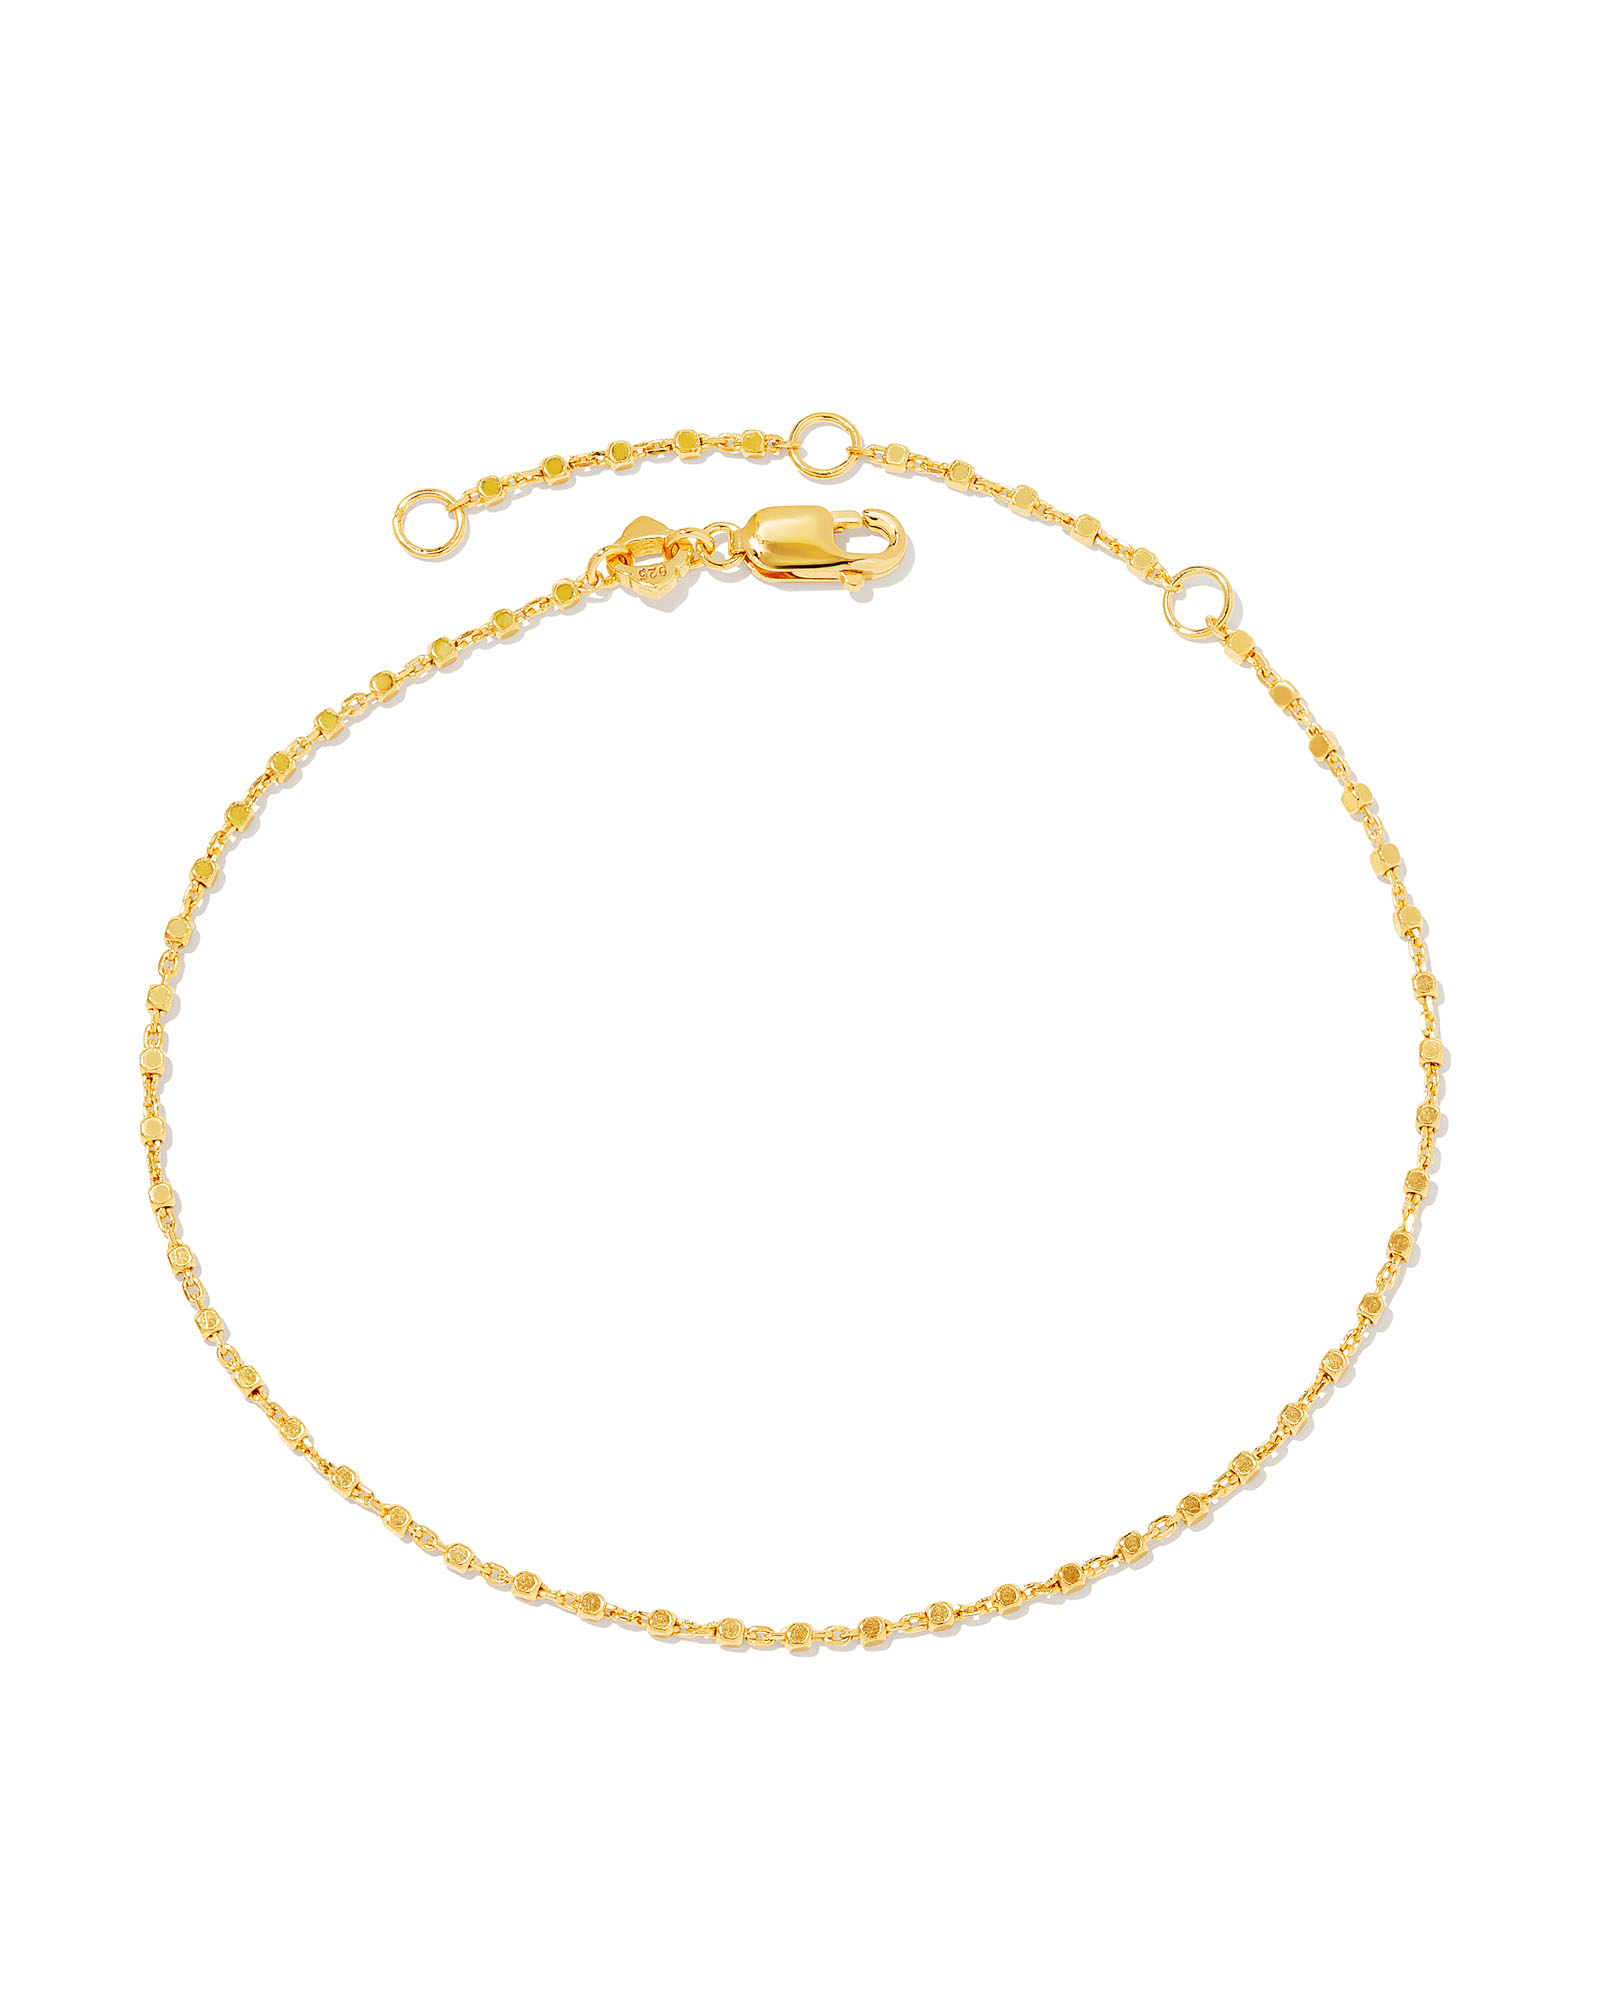 Single Satellite Chain Bracelet in Sterling Silver & 18k Yellow Gold Vermeil